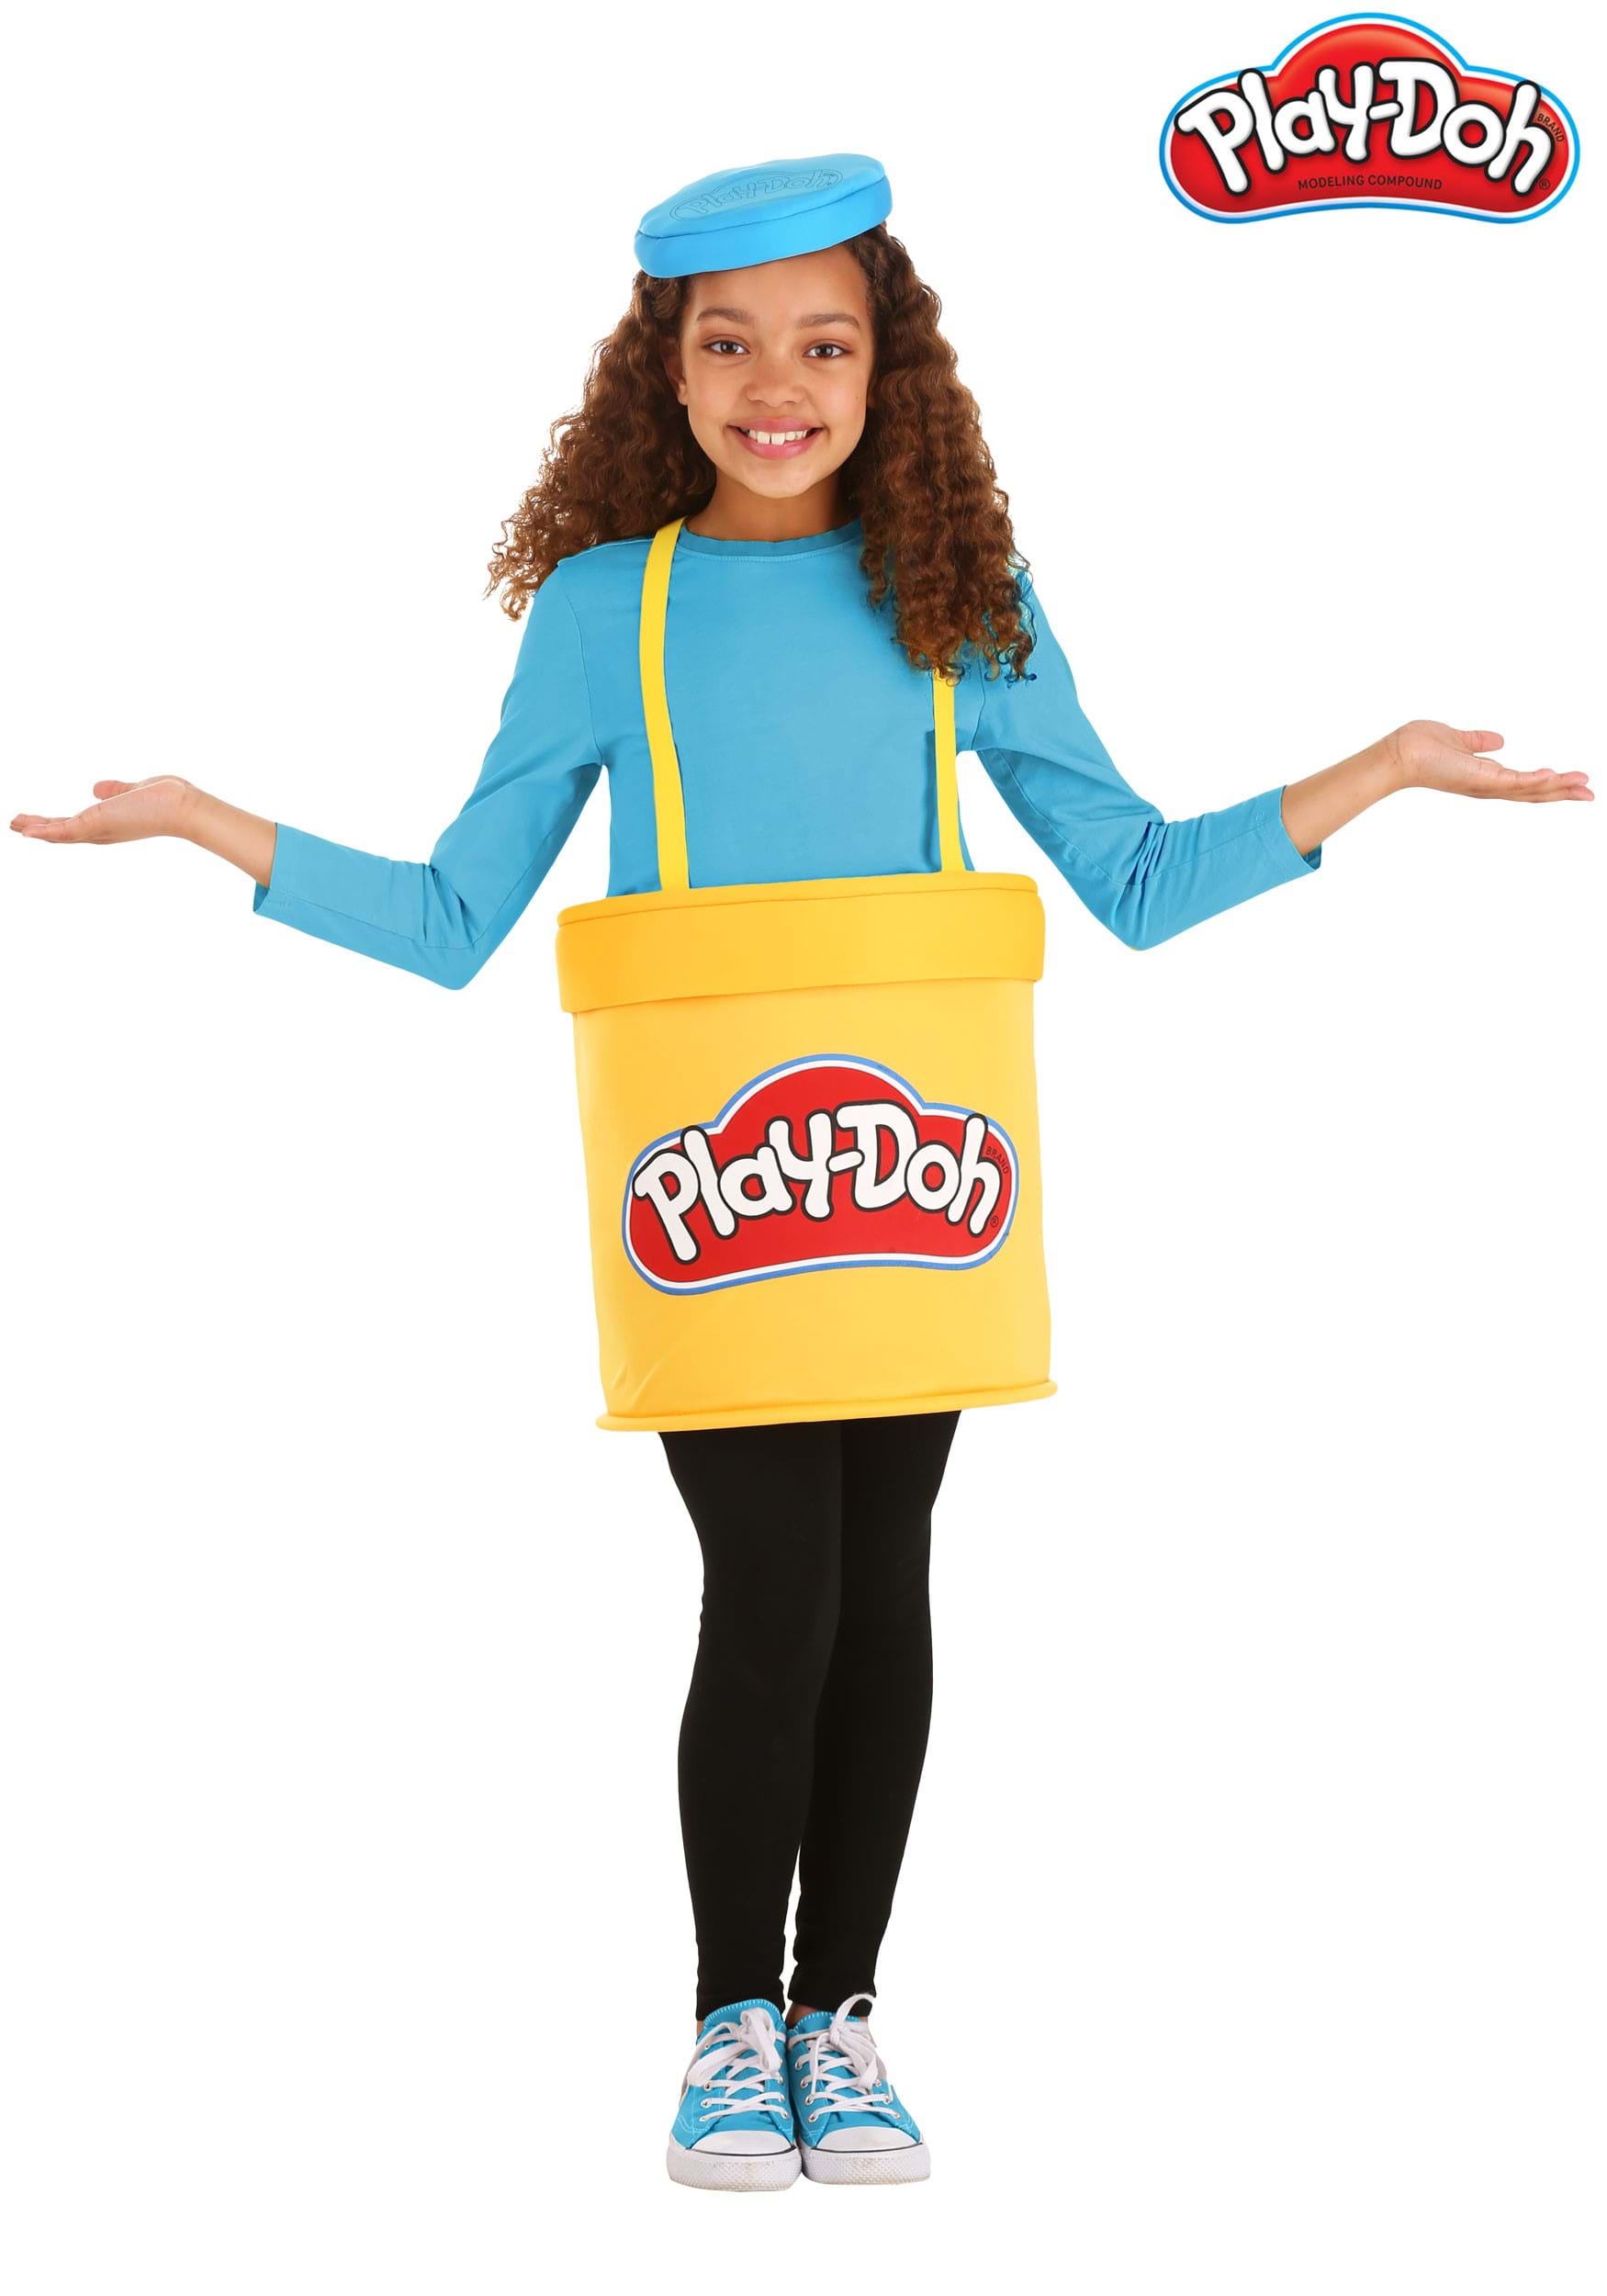 Kid’s Play-Doh Costume